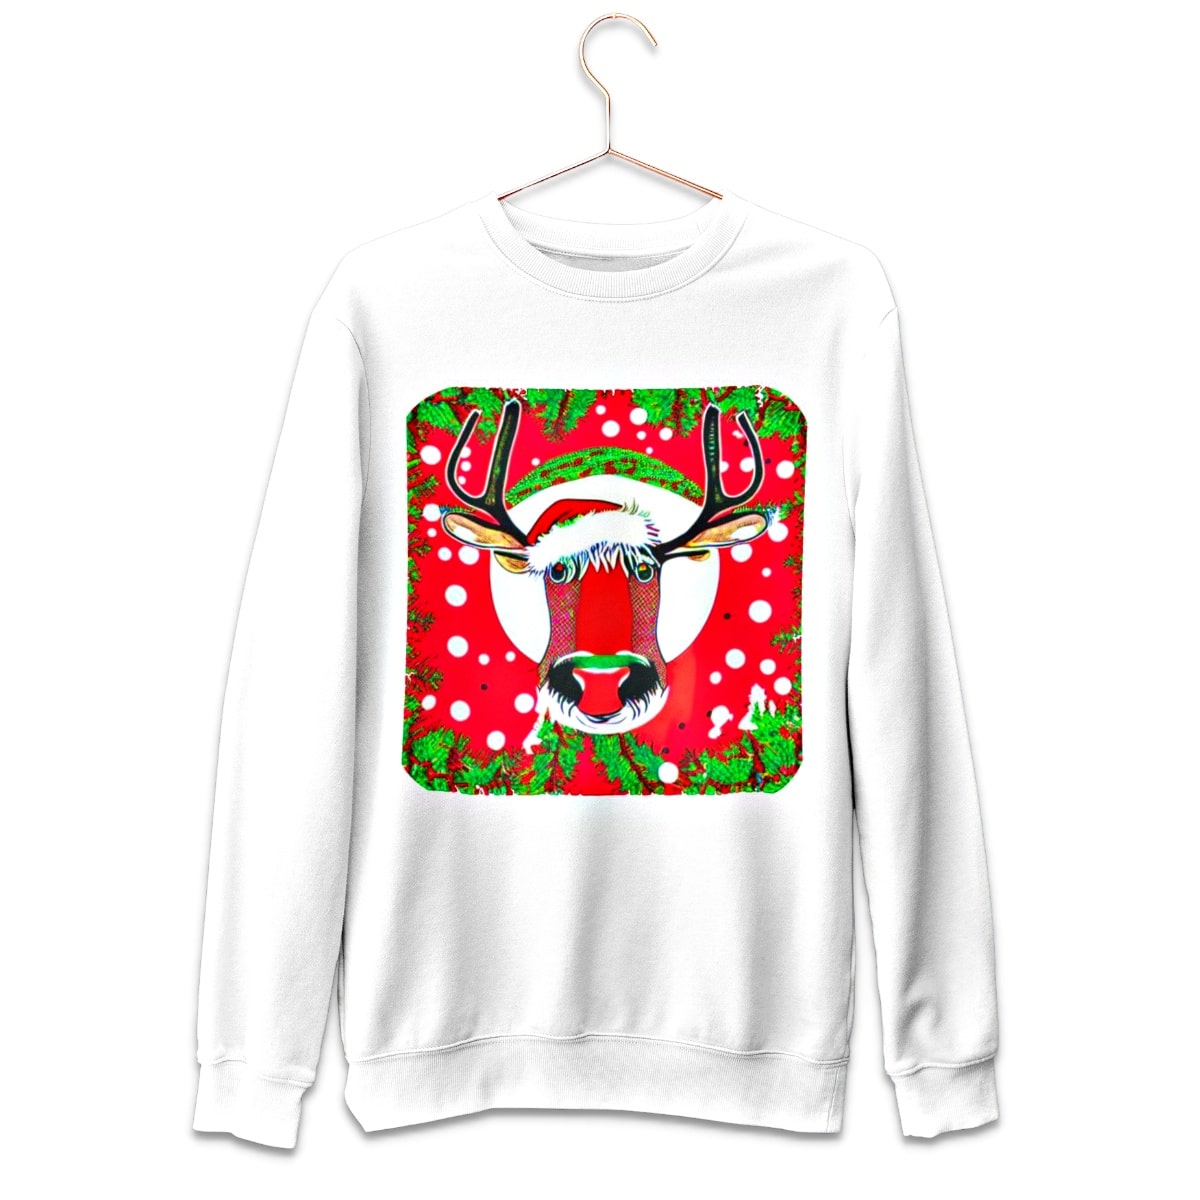 Trippy Reindeer Christmas Sweater - Santaland